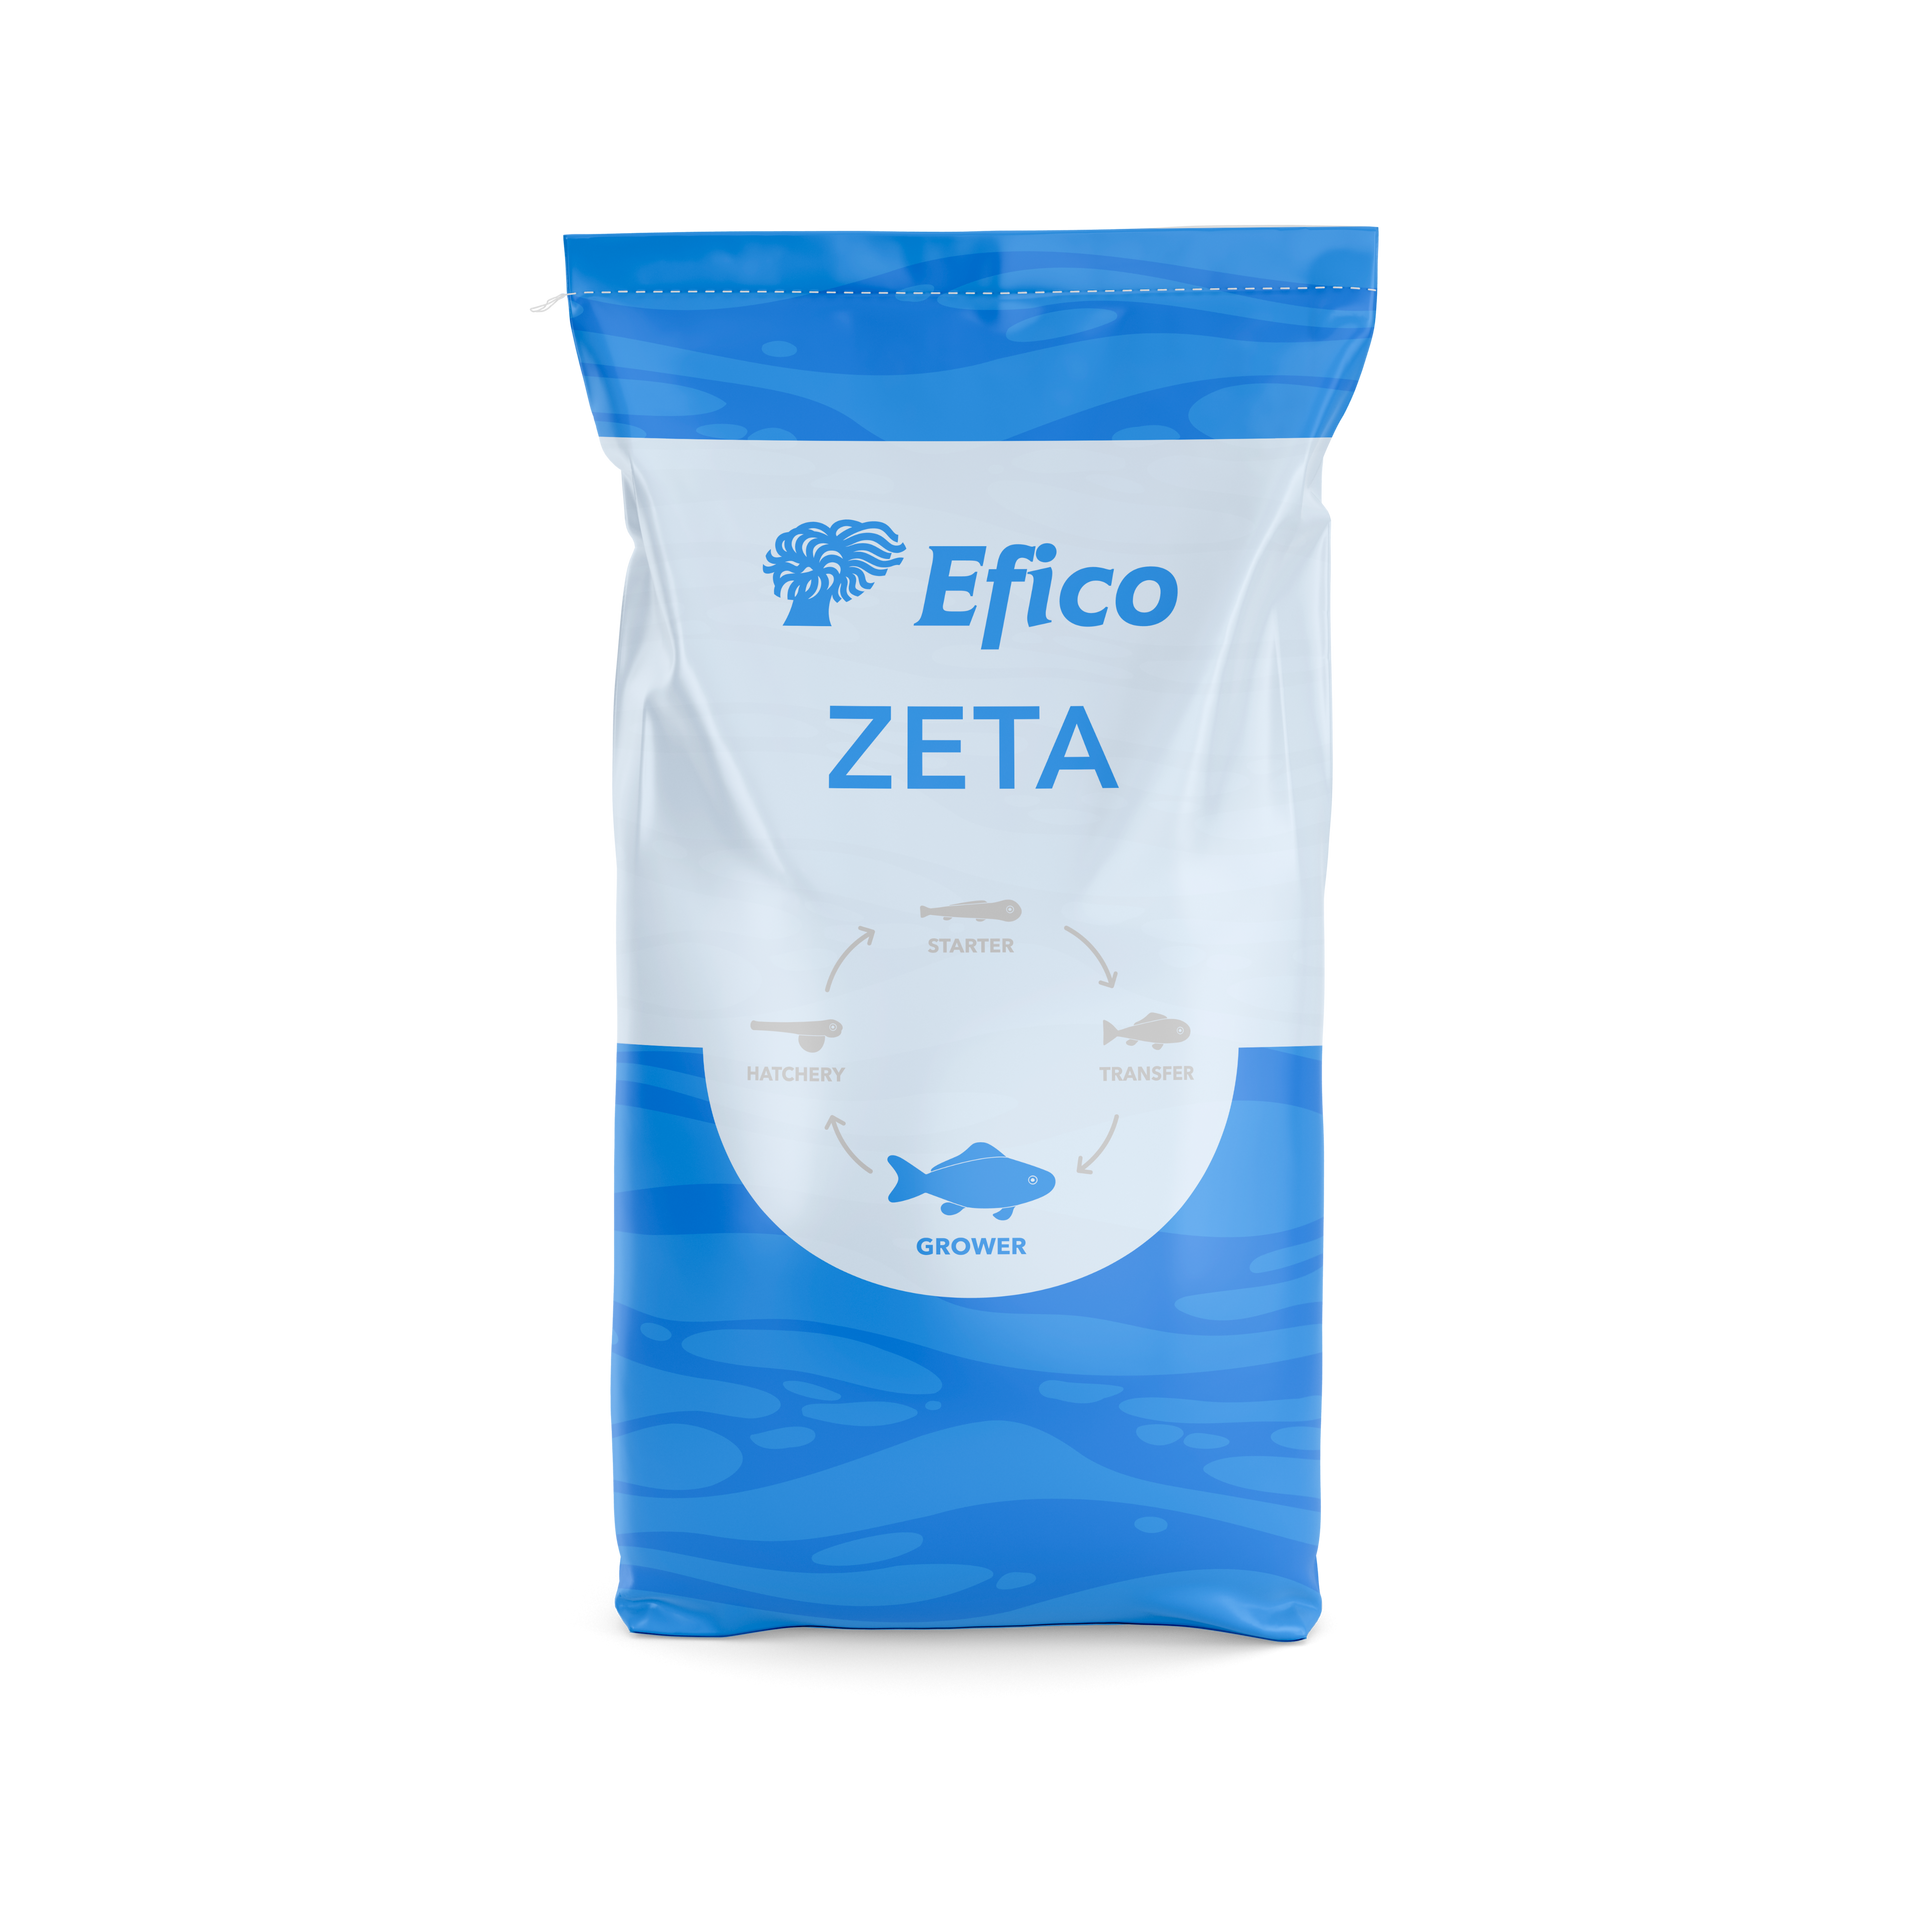 Efico Zeta  high performance feed for grouper | BioMar